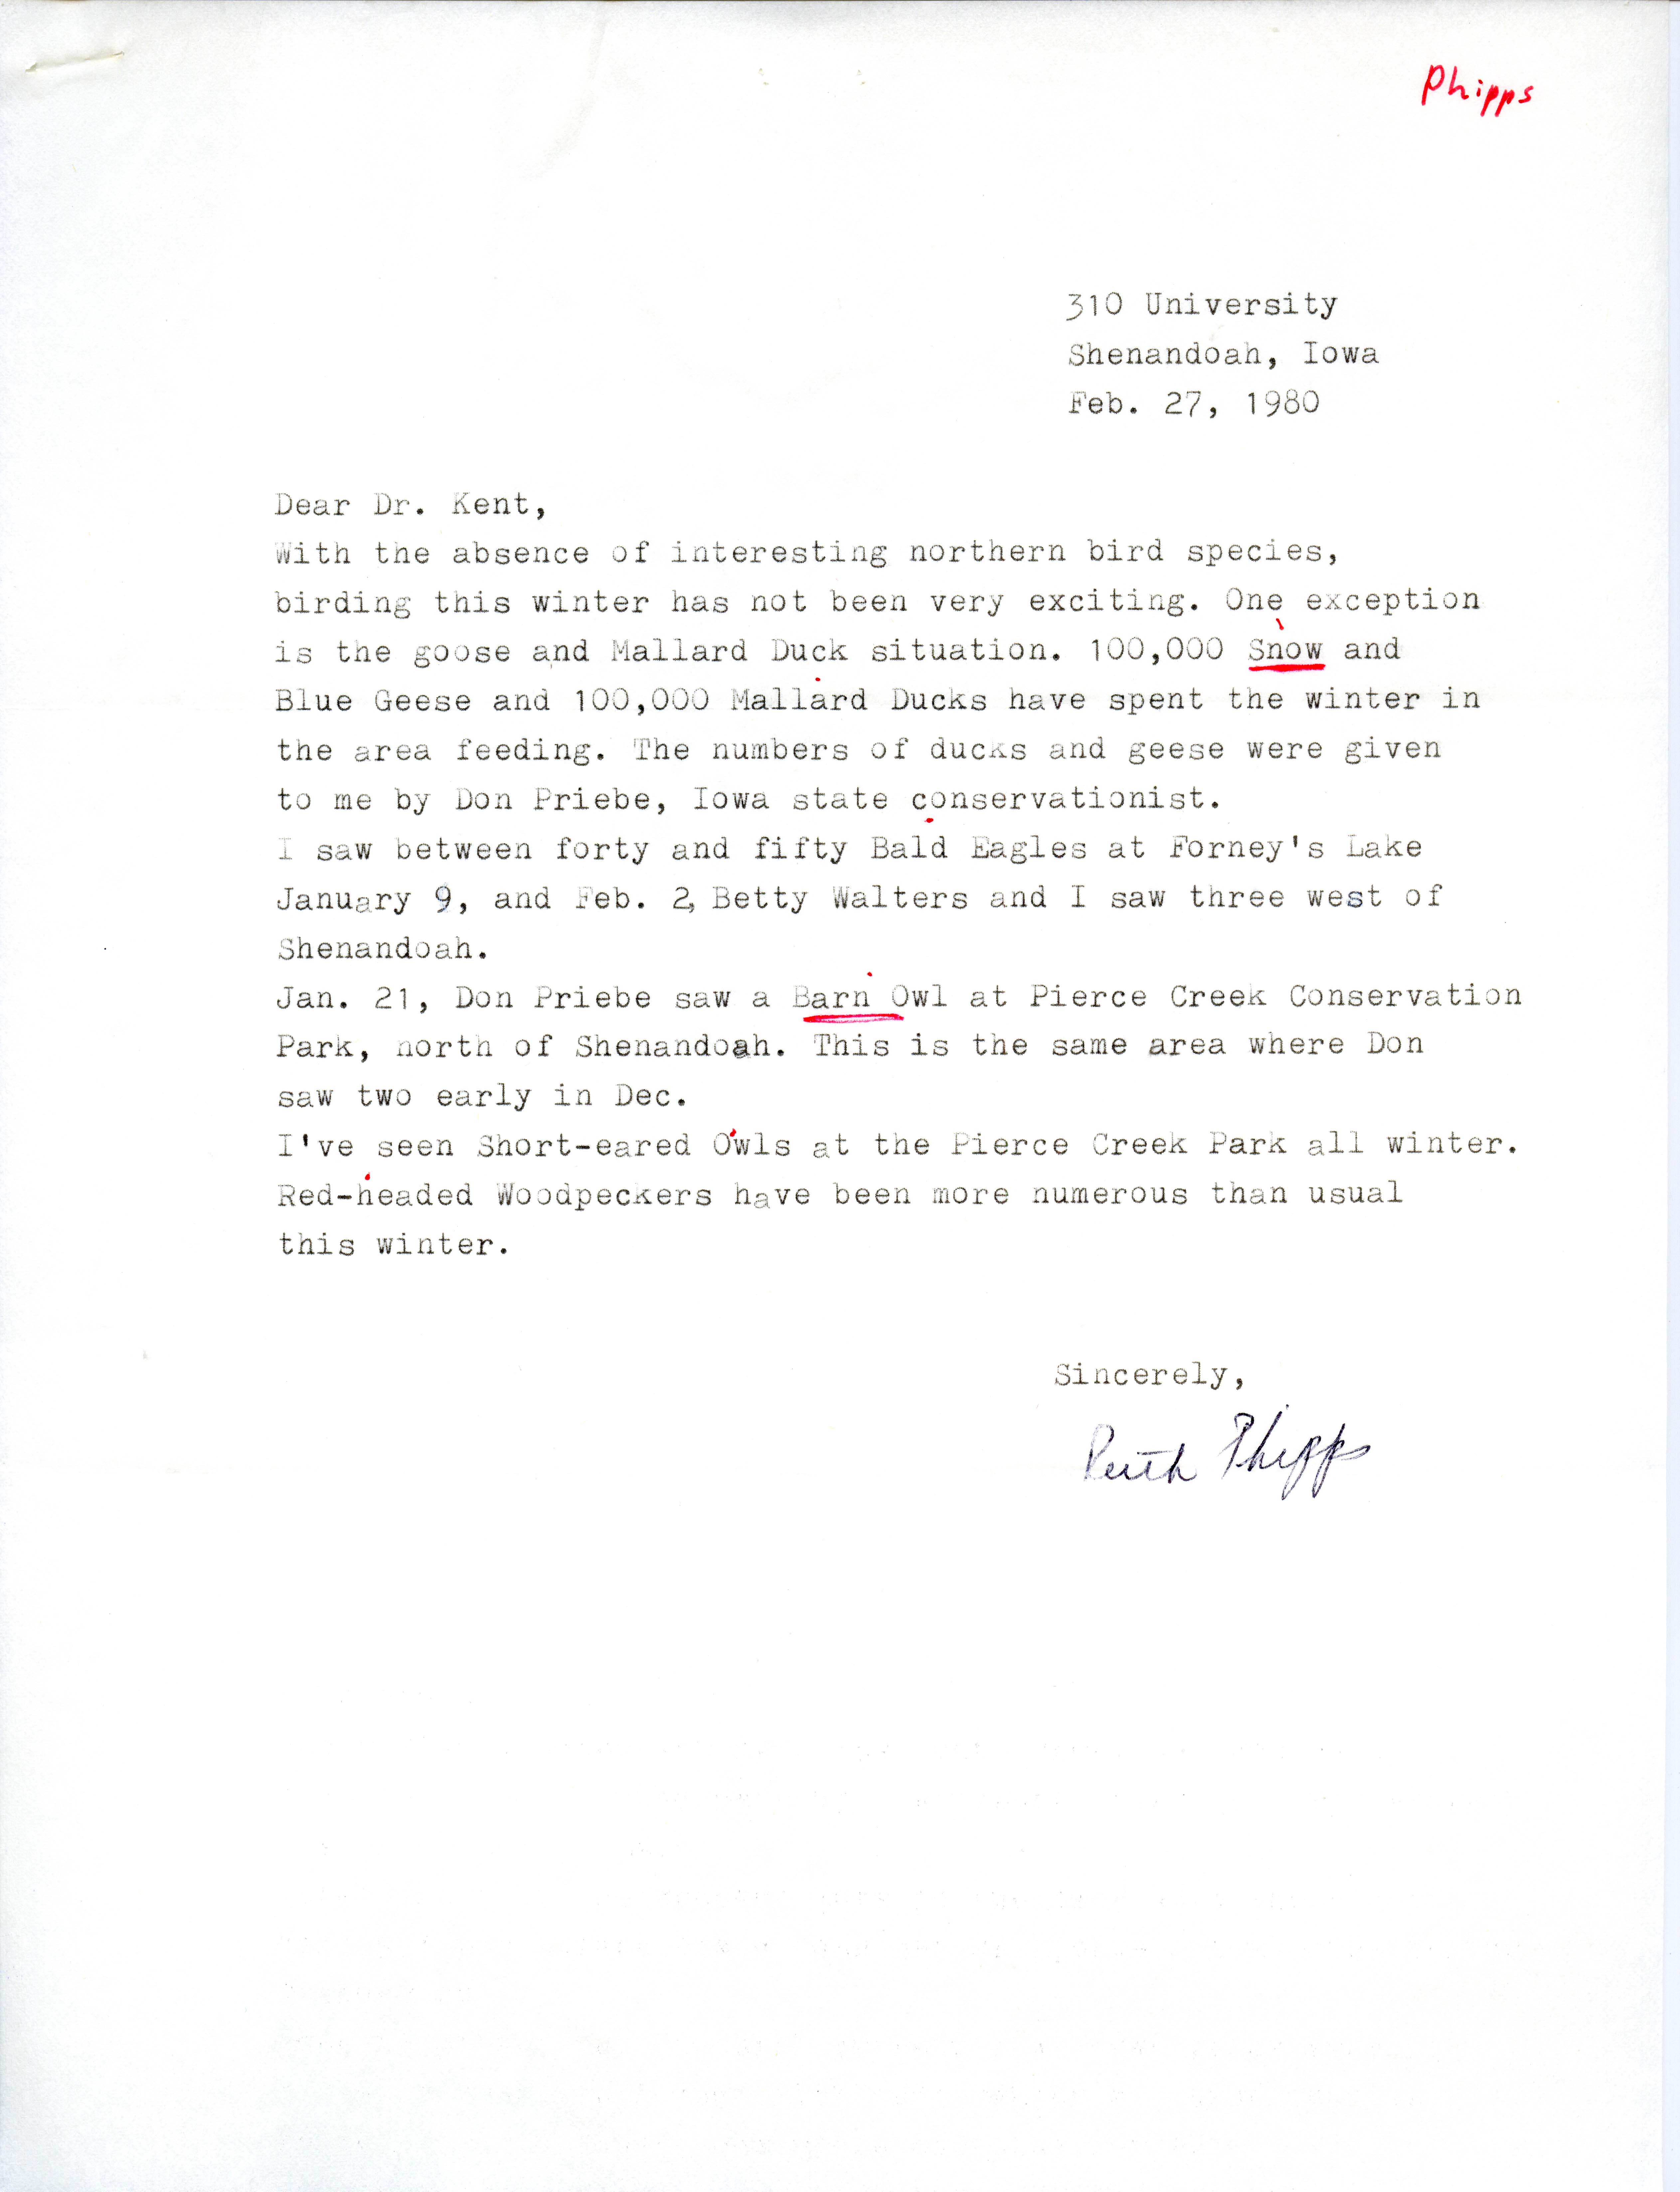 Ruth Phipps letter to Thomas H. Kent regarding bird sightings, February 27, 1980